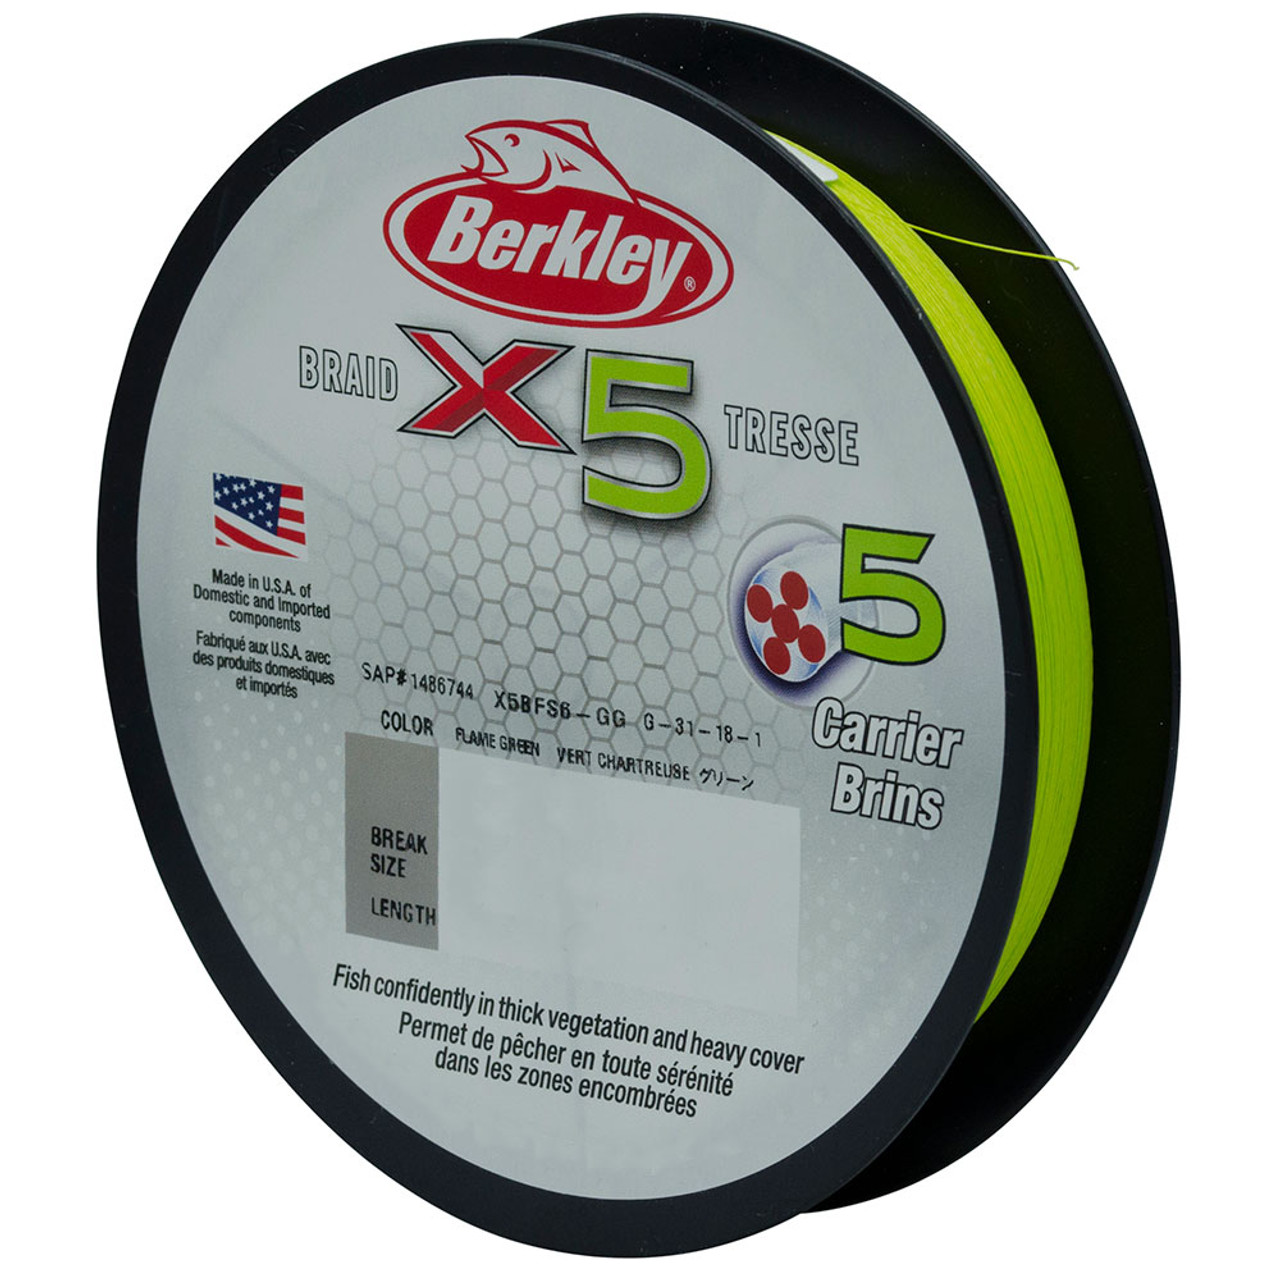 Berkley X5™ Braided Line - Buy cheap Braided Lines!